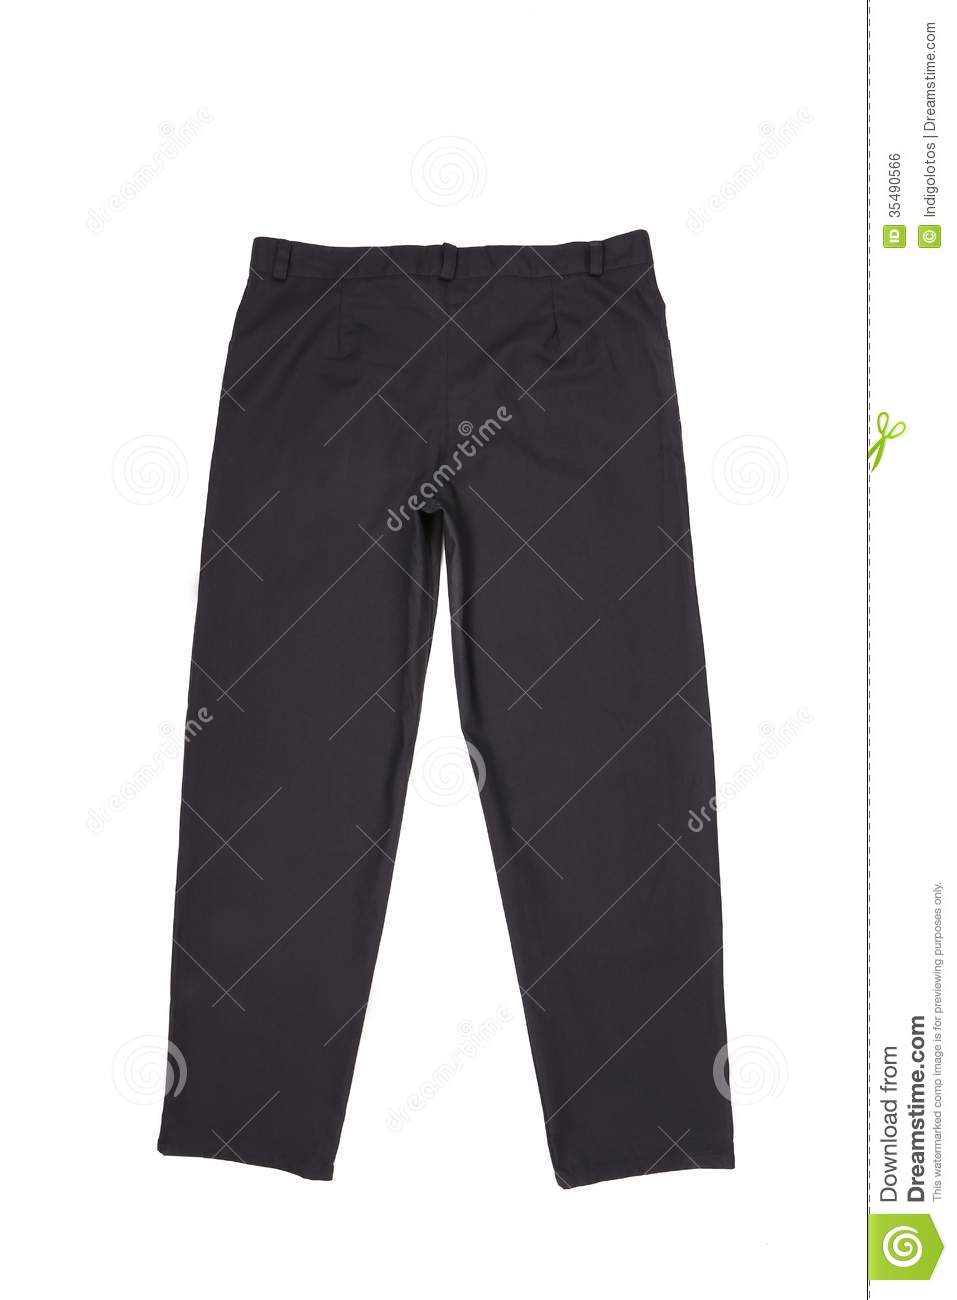 Black Men Trousers Royalty Free Stock Image   Image  35490566